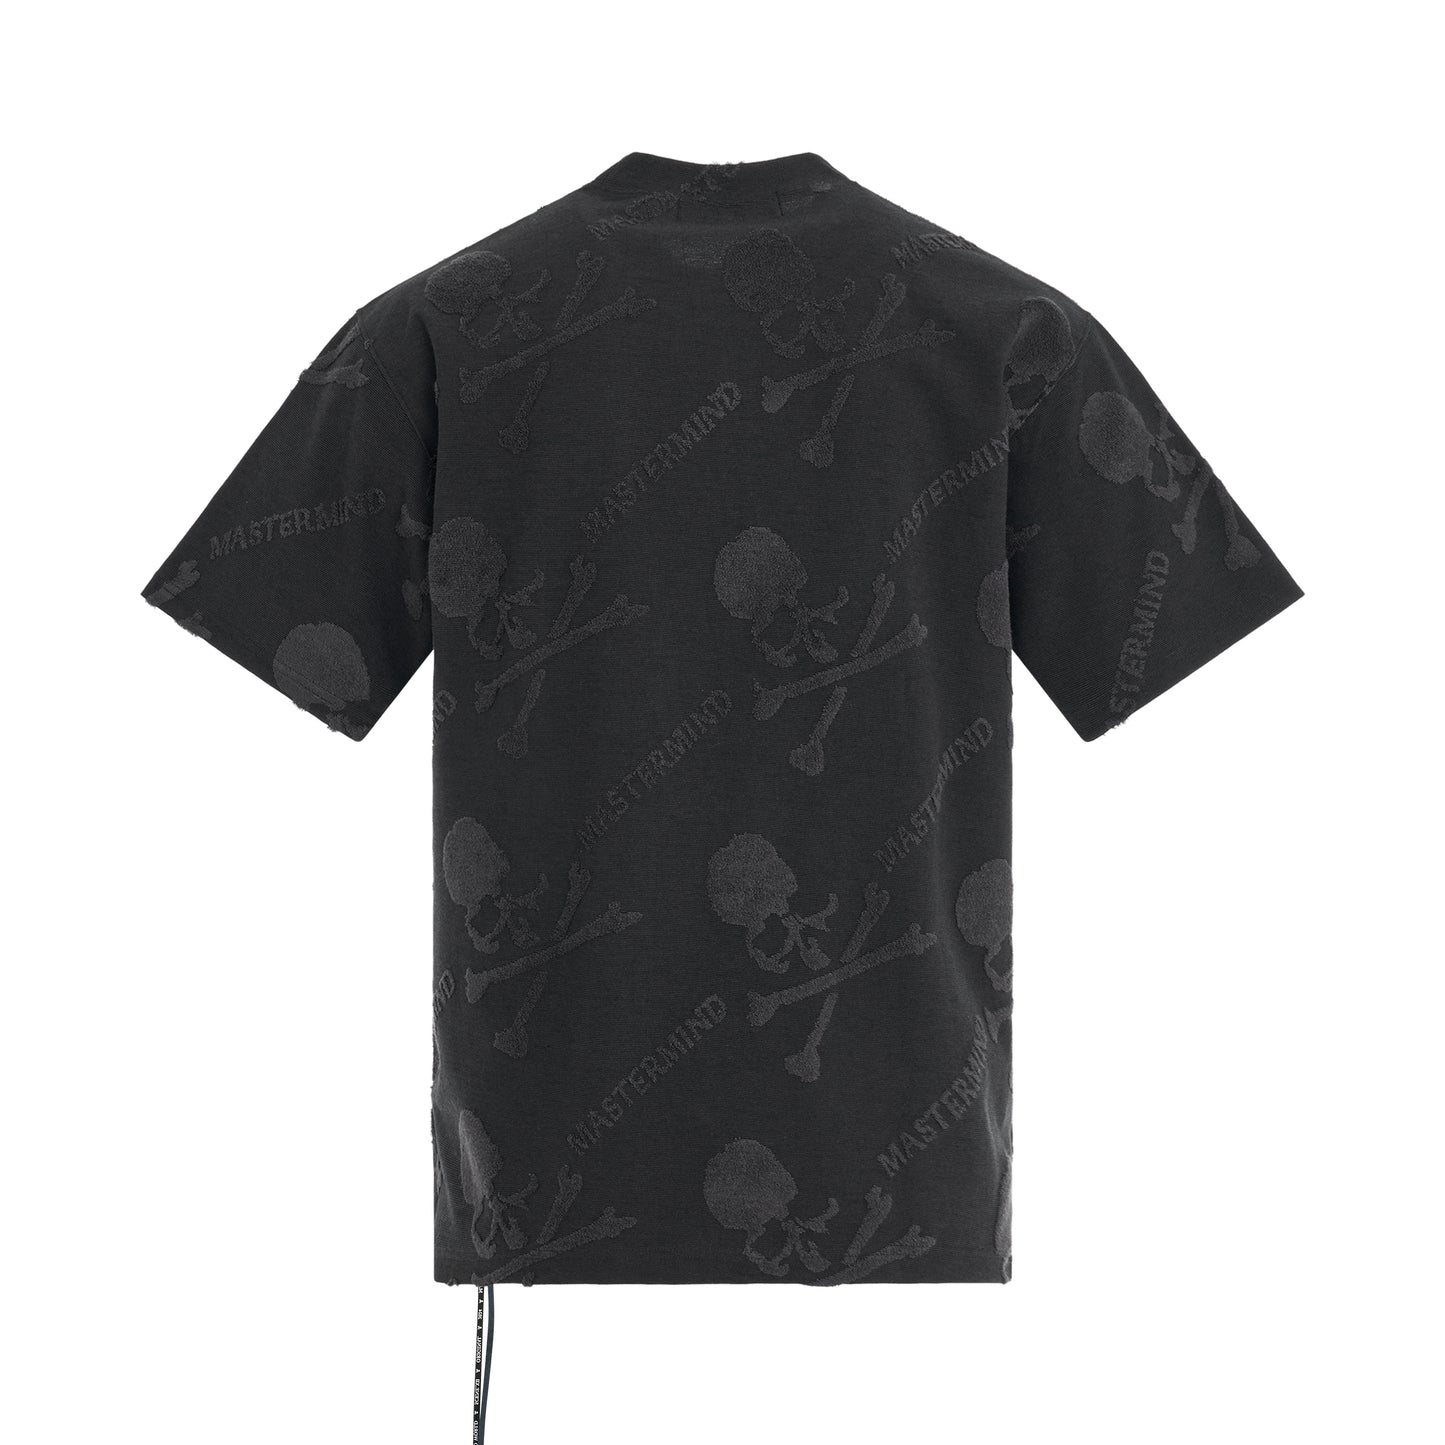 Pile Monogram T-Shirt in Black